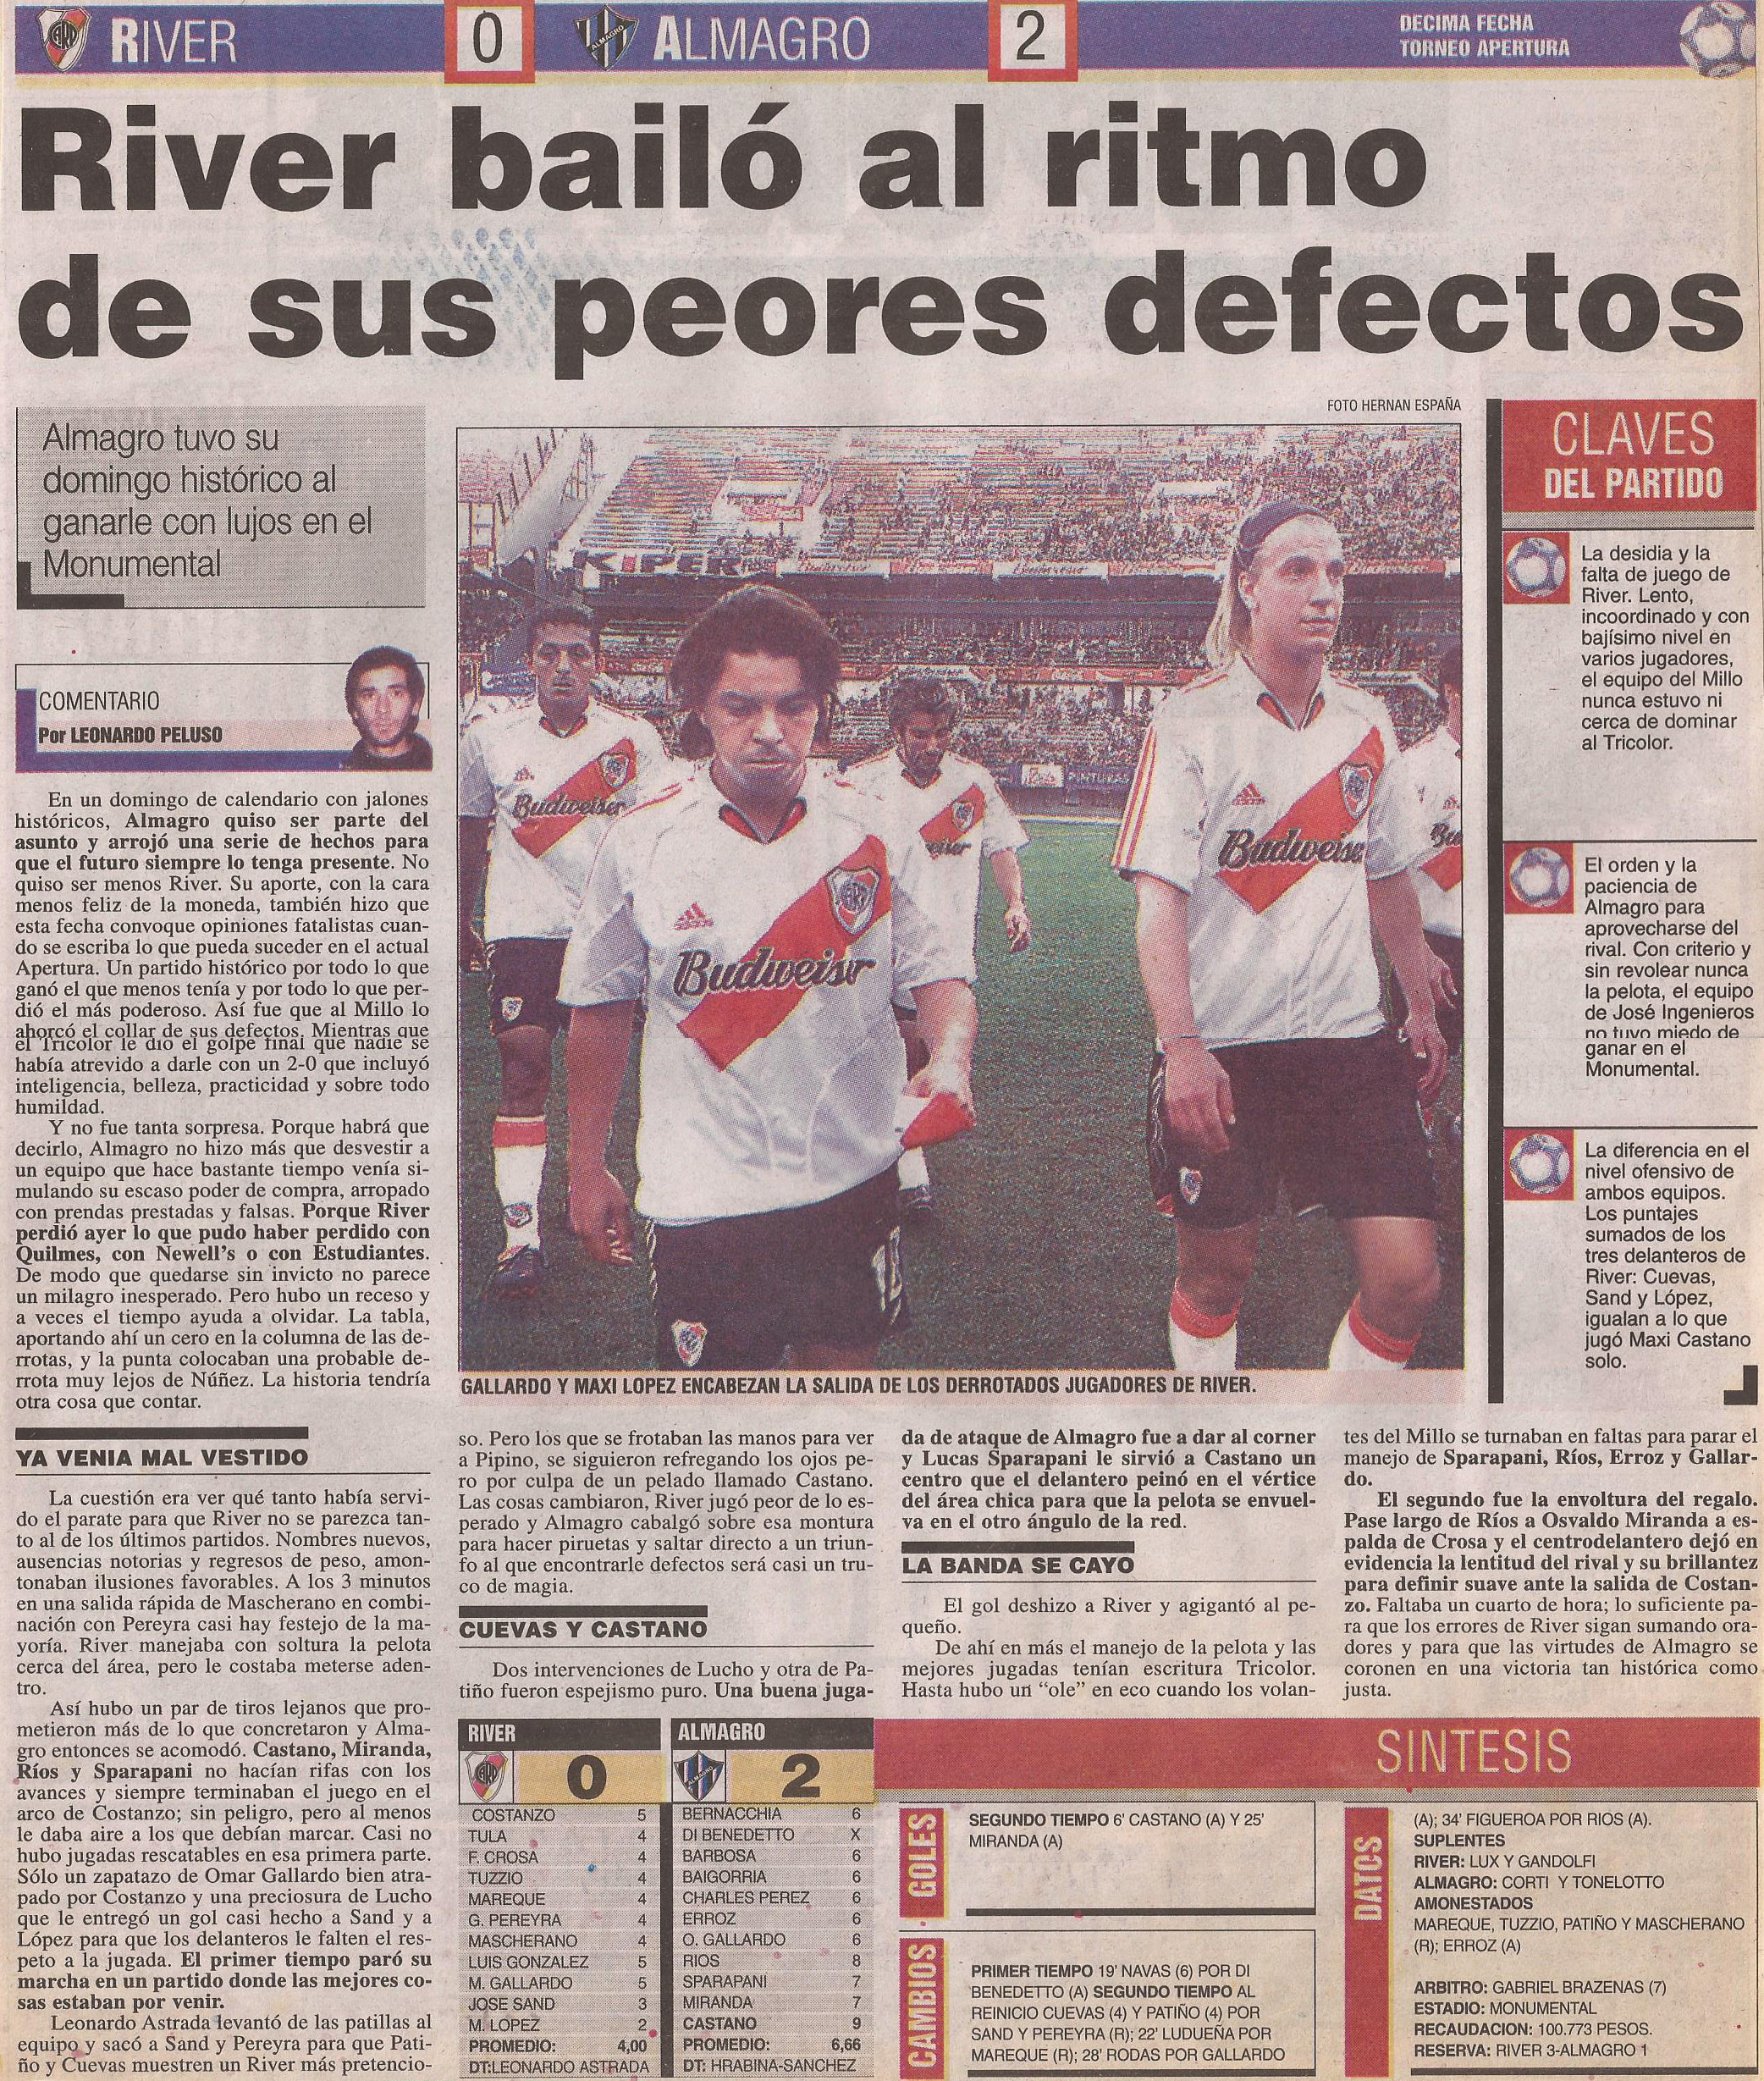 2004-05 Primera Division - River Plate vs Almagro - Diario Popular